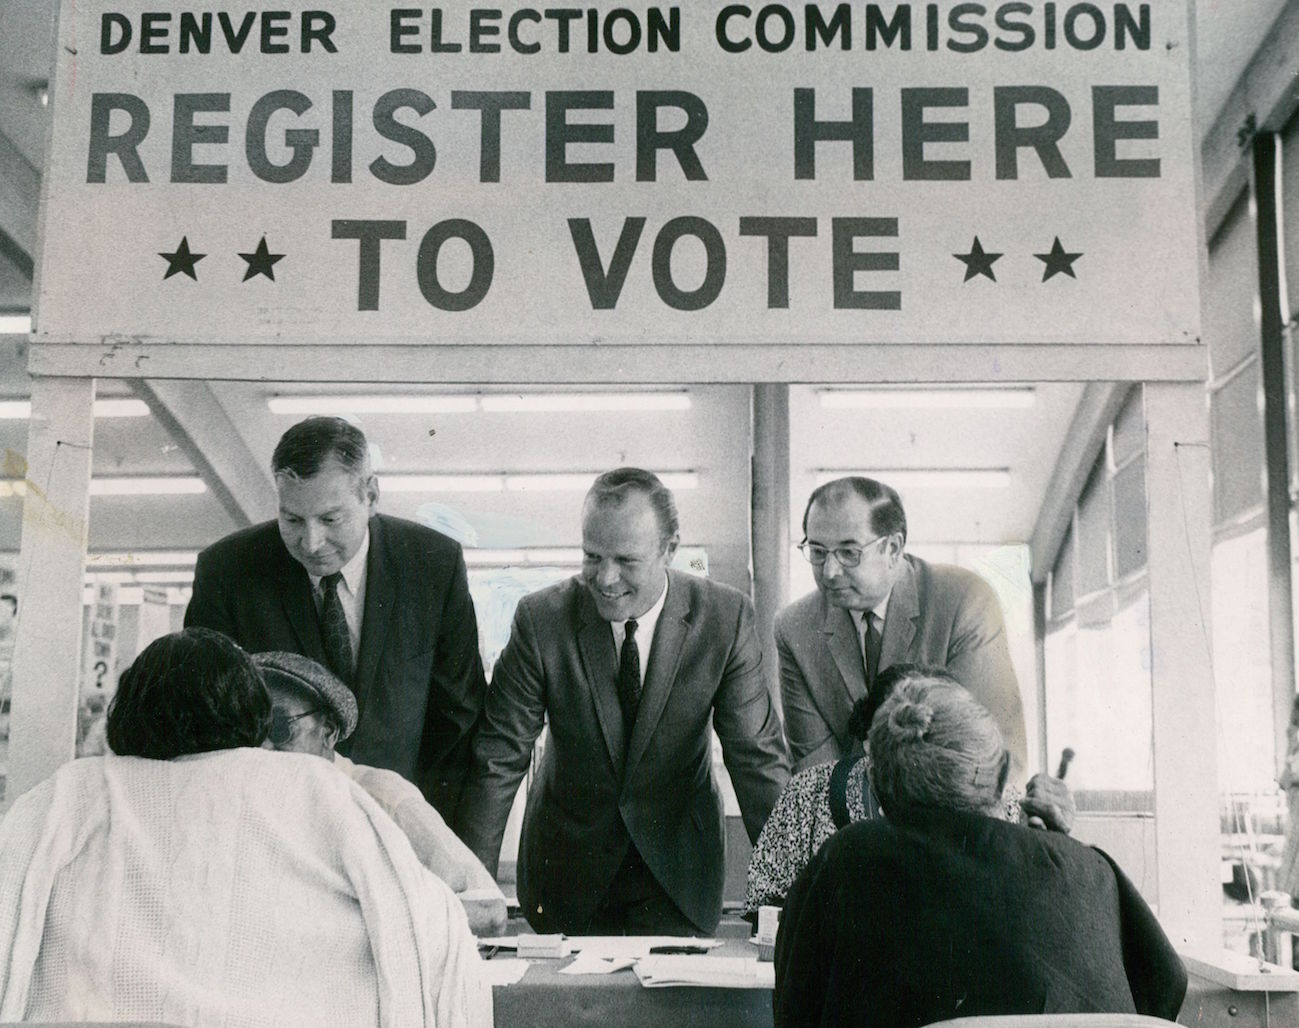 JUL 9 1968, JUL 10 1968; Branch Voter Registration Opens; Branch registration opened Tuesday and Den